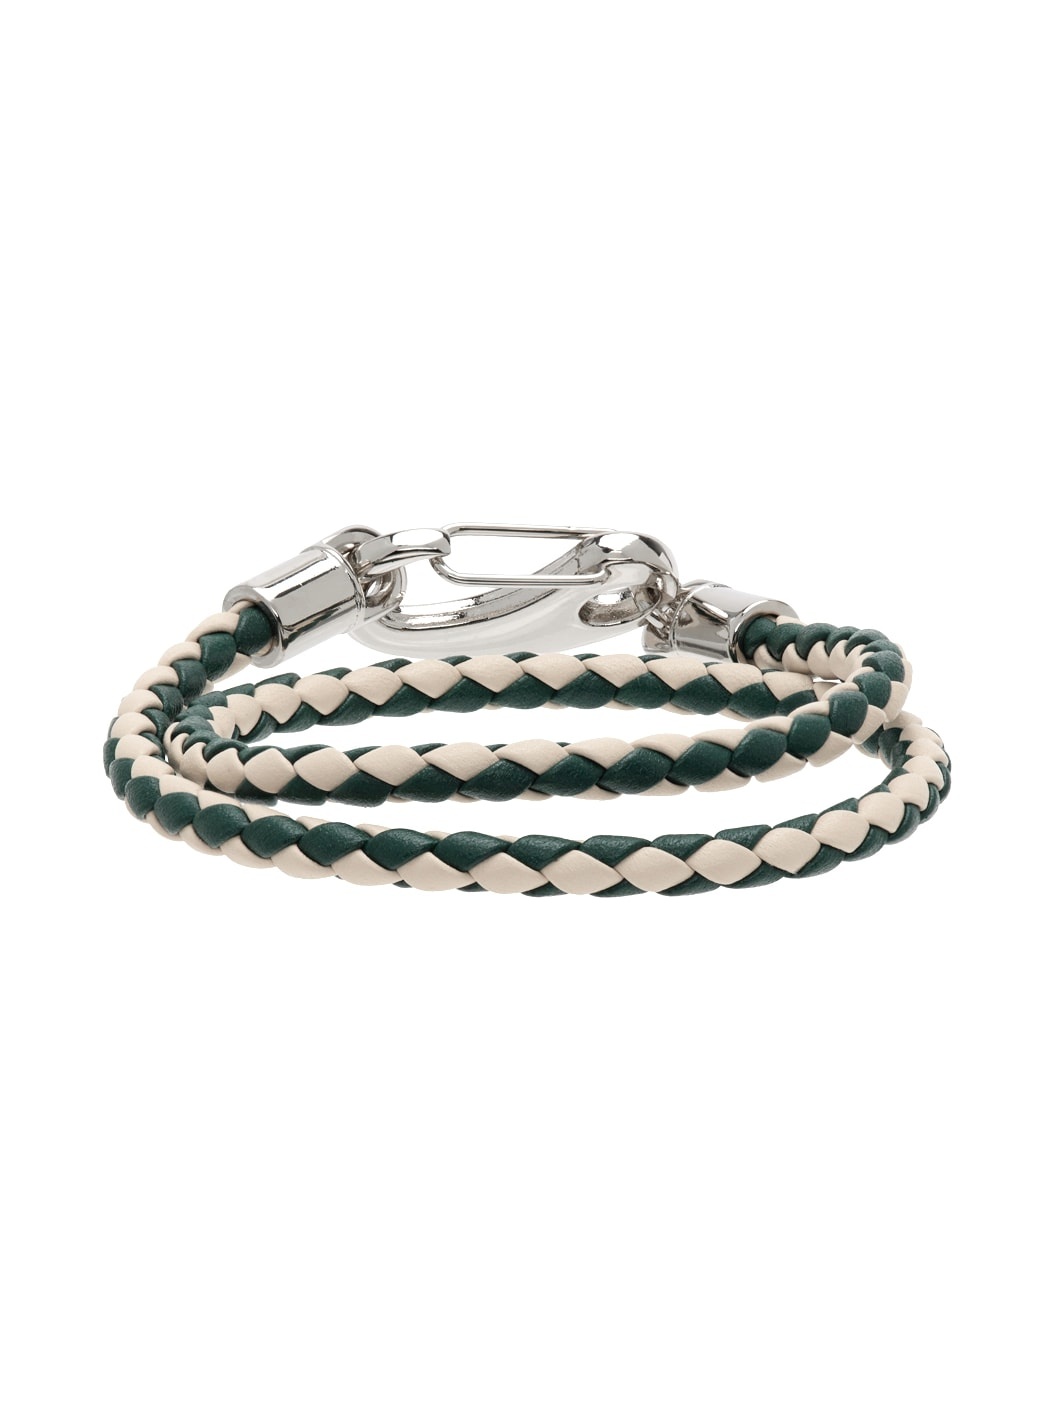 White & Green Double Wrap Braided Bracelet - 4